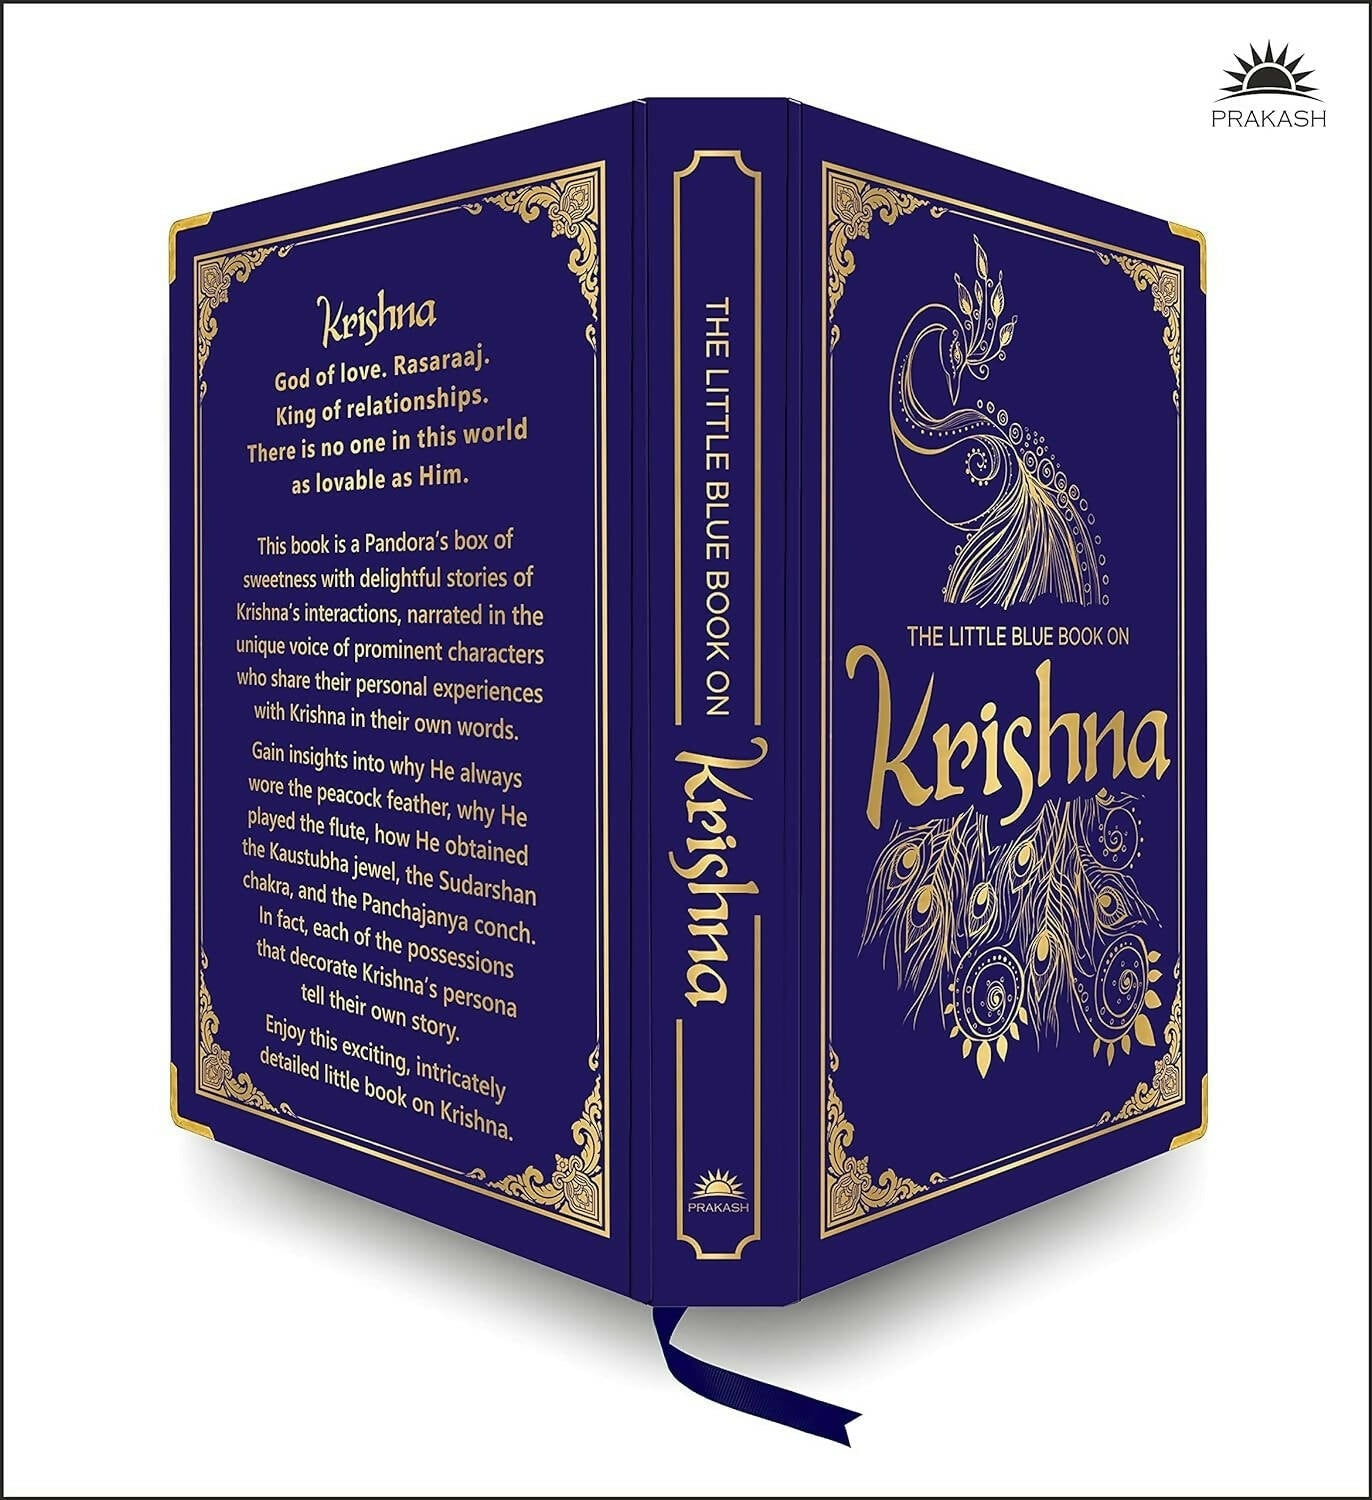 The Little Blue Book on Krishna by Shubha Vilas